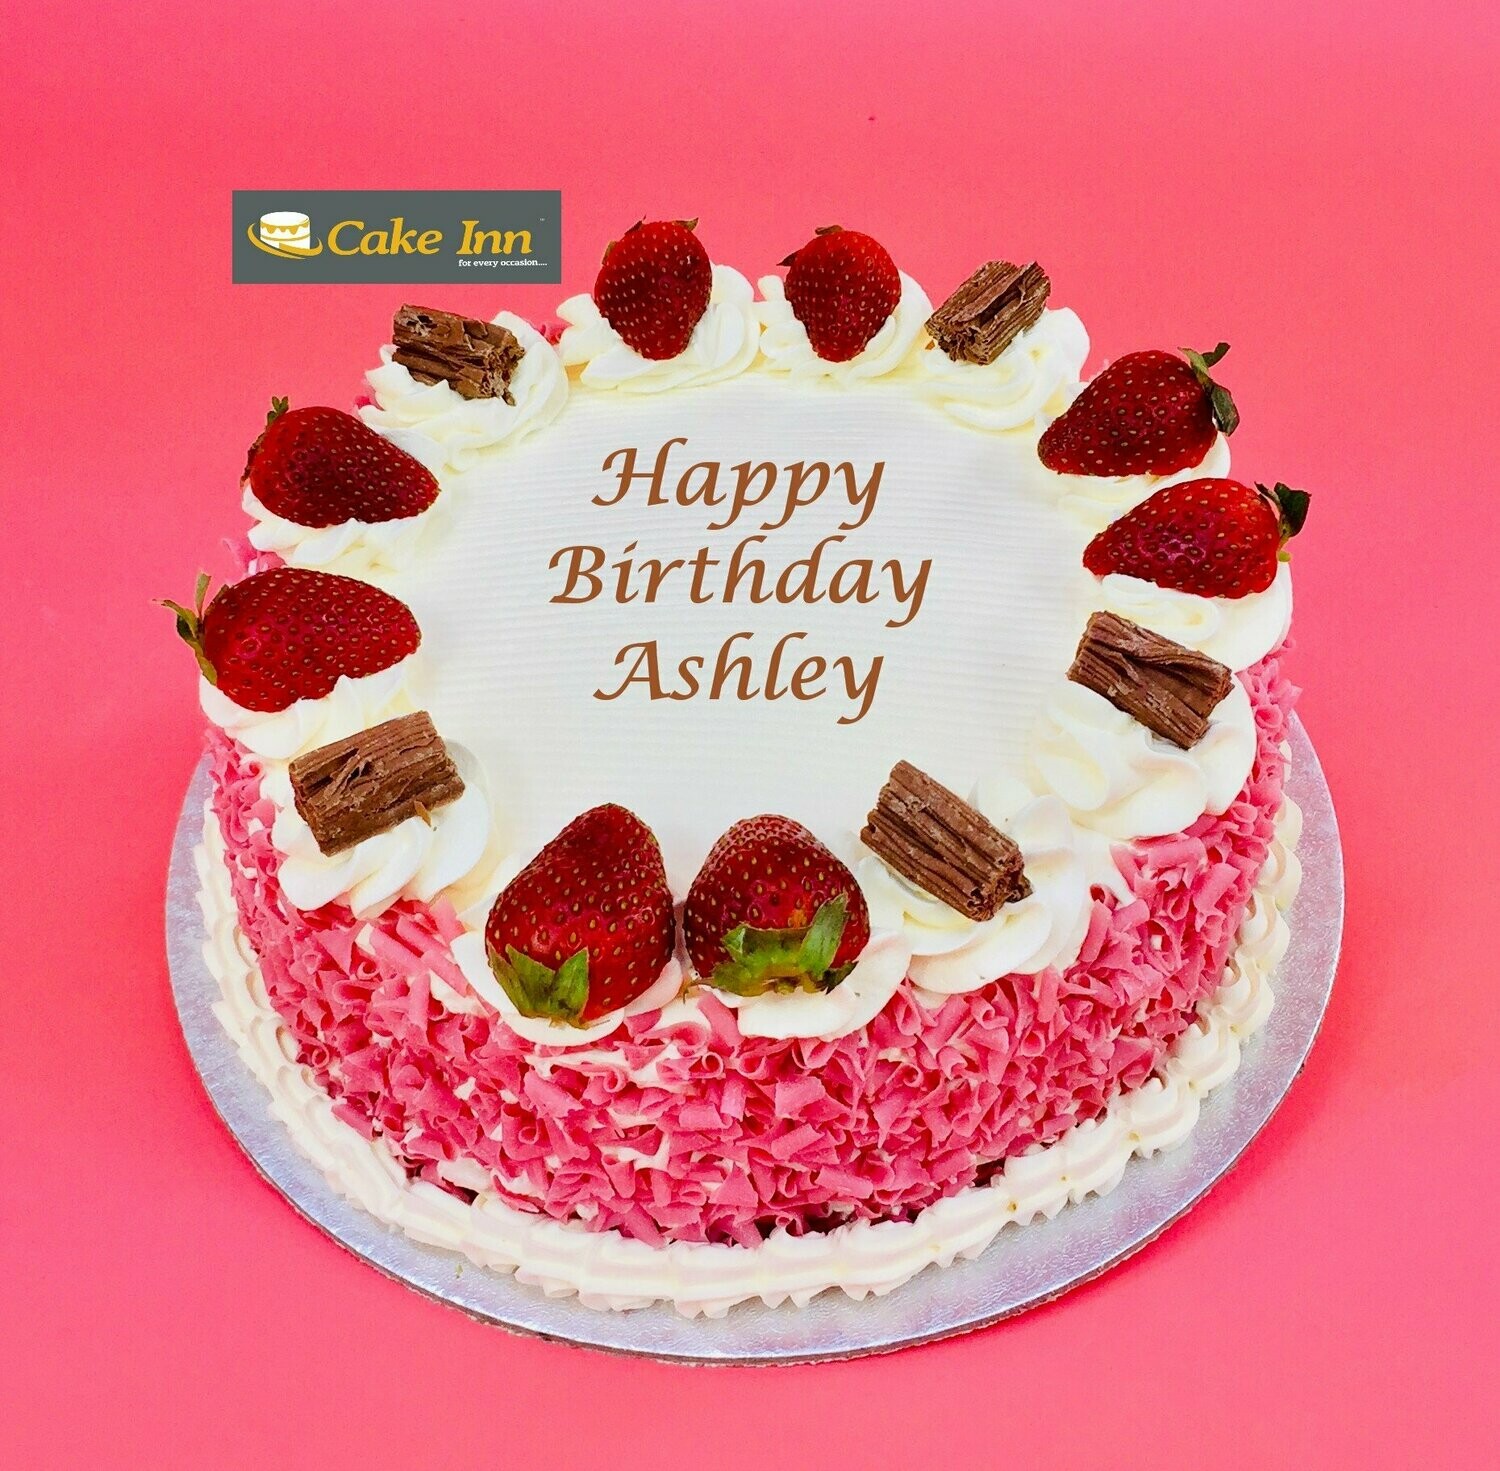 Happy 21st Birthday Ashley!! 🎉🍻... - Lorilicious Cakes | Facebook